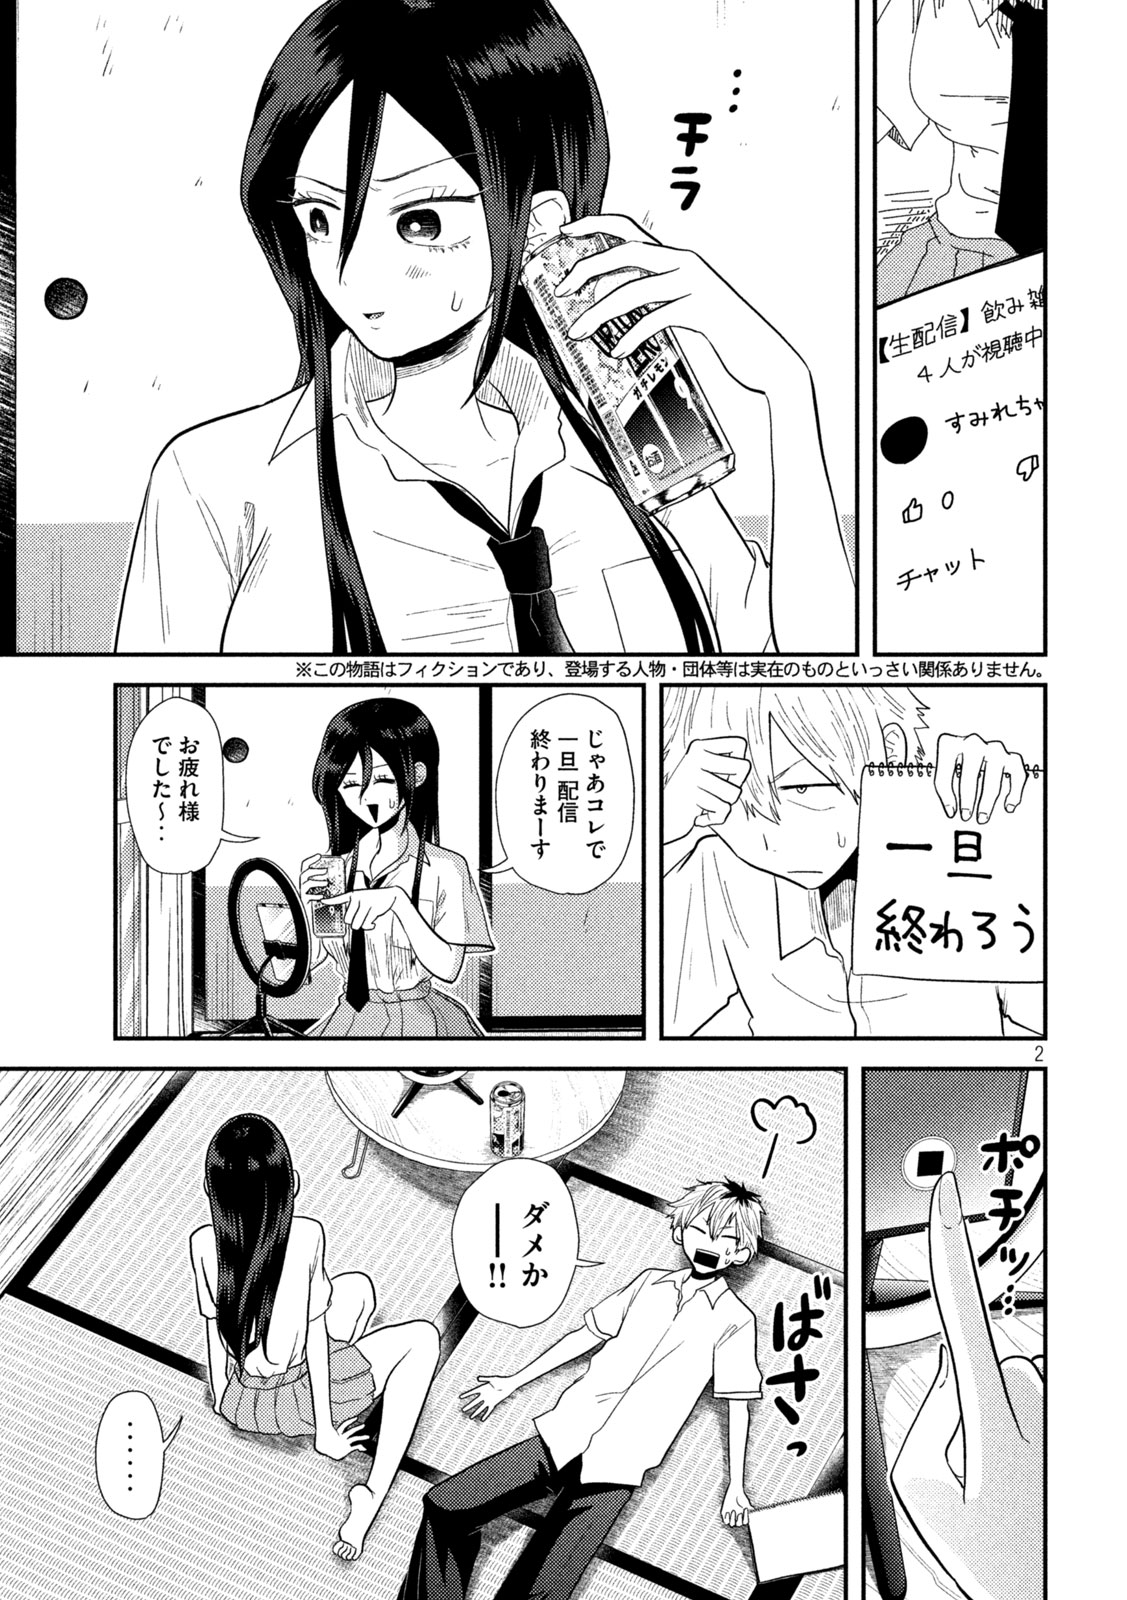 Heisei Haizanhei Sumire-chan - Chapter 15 - Page 3